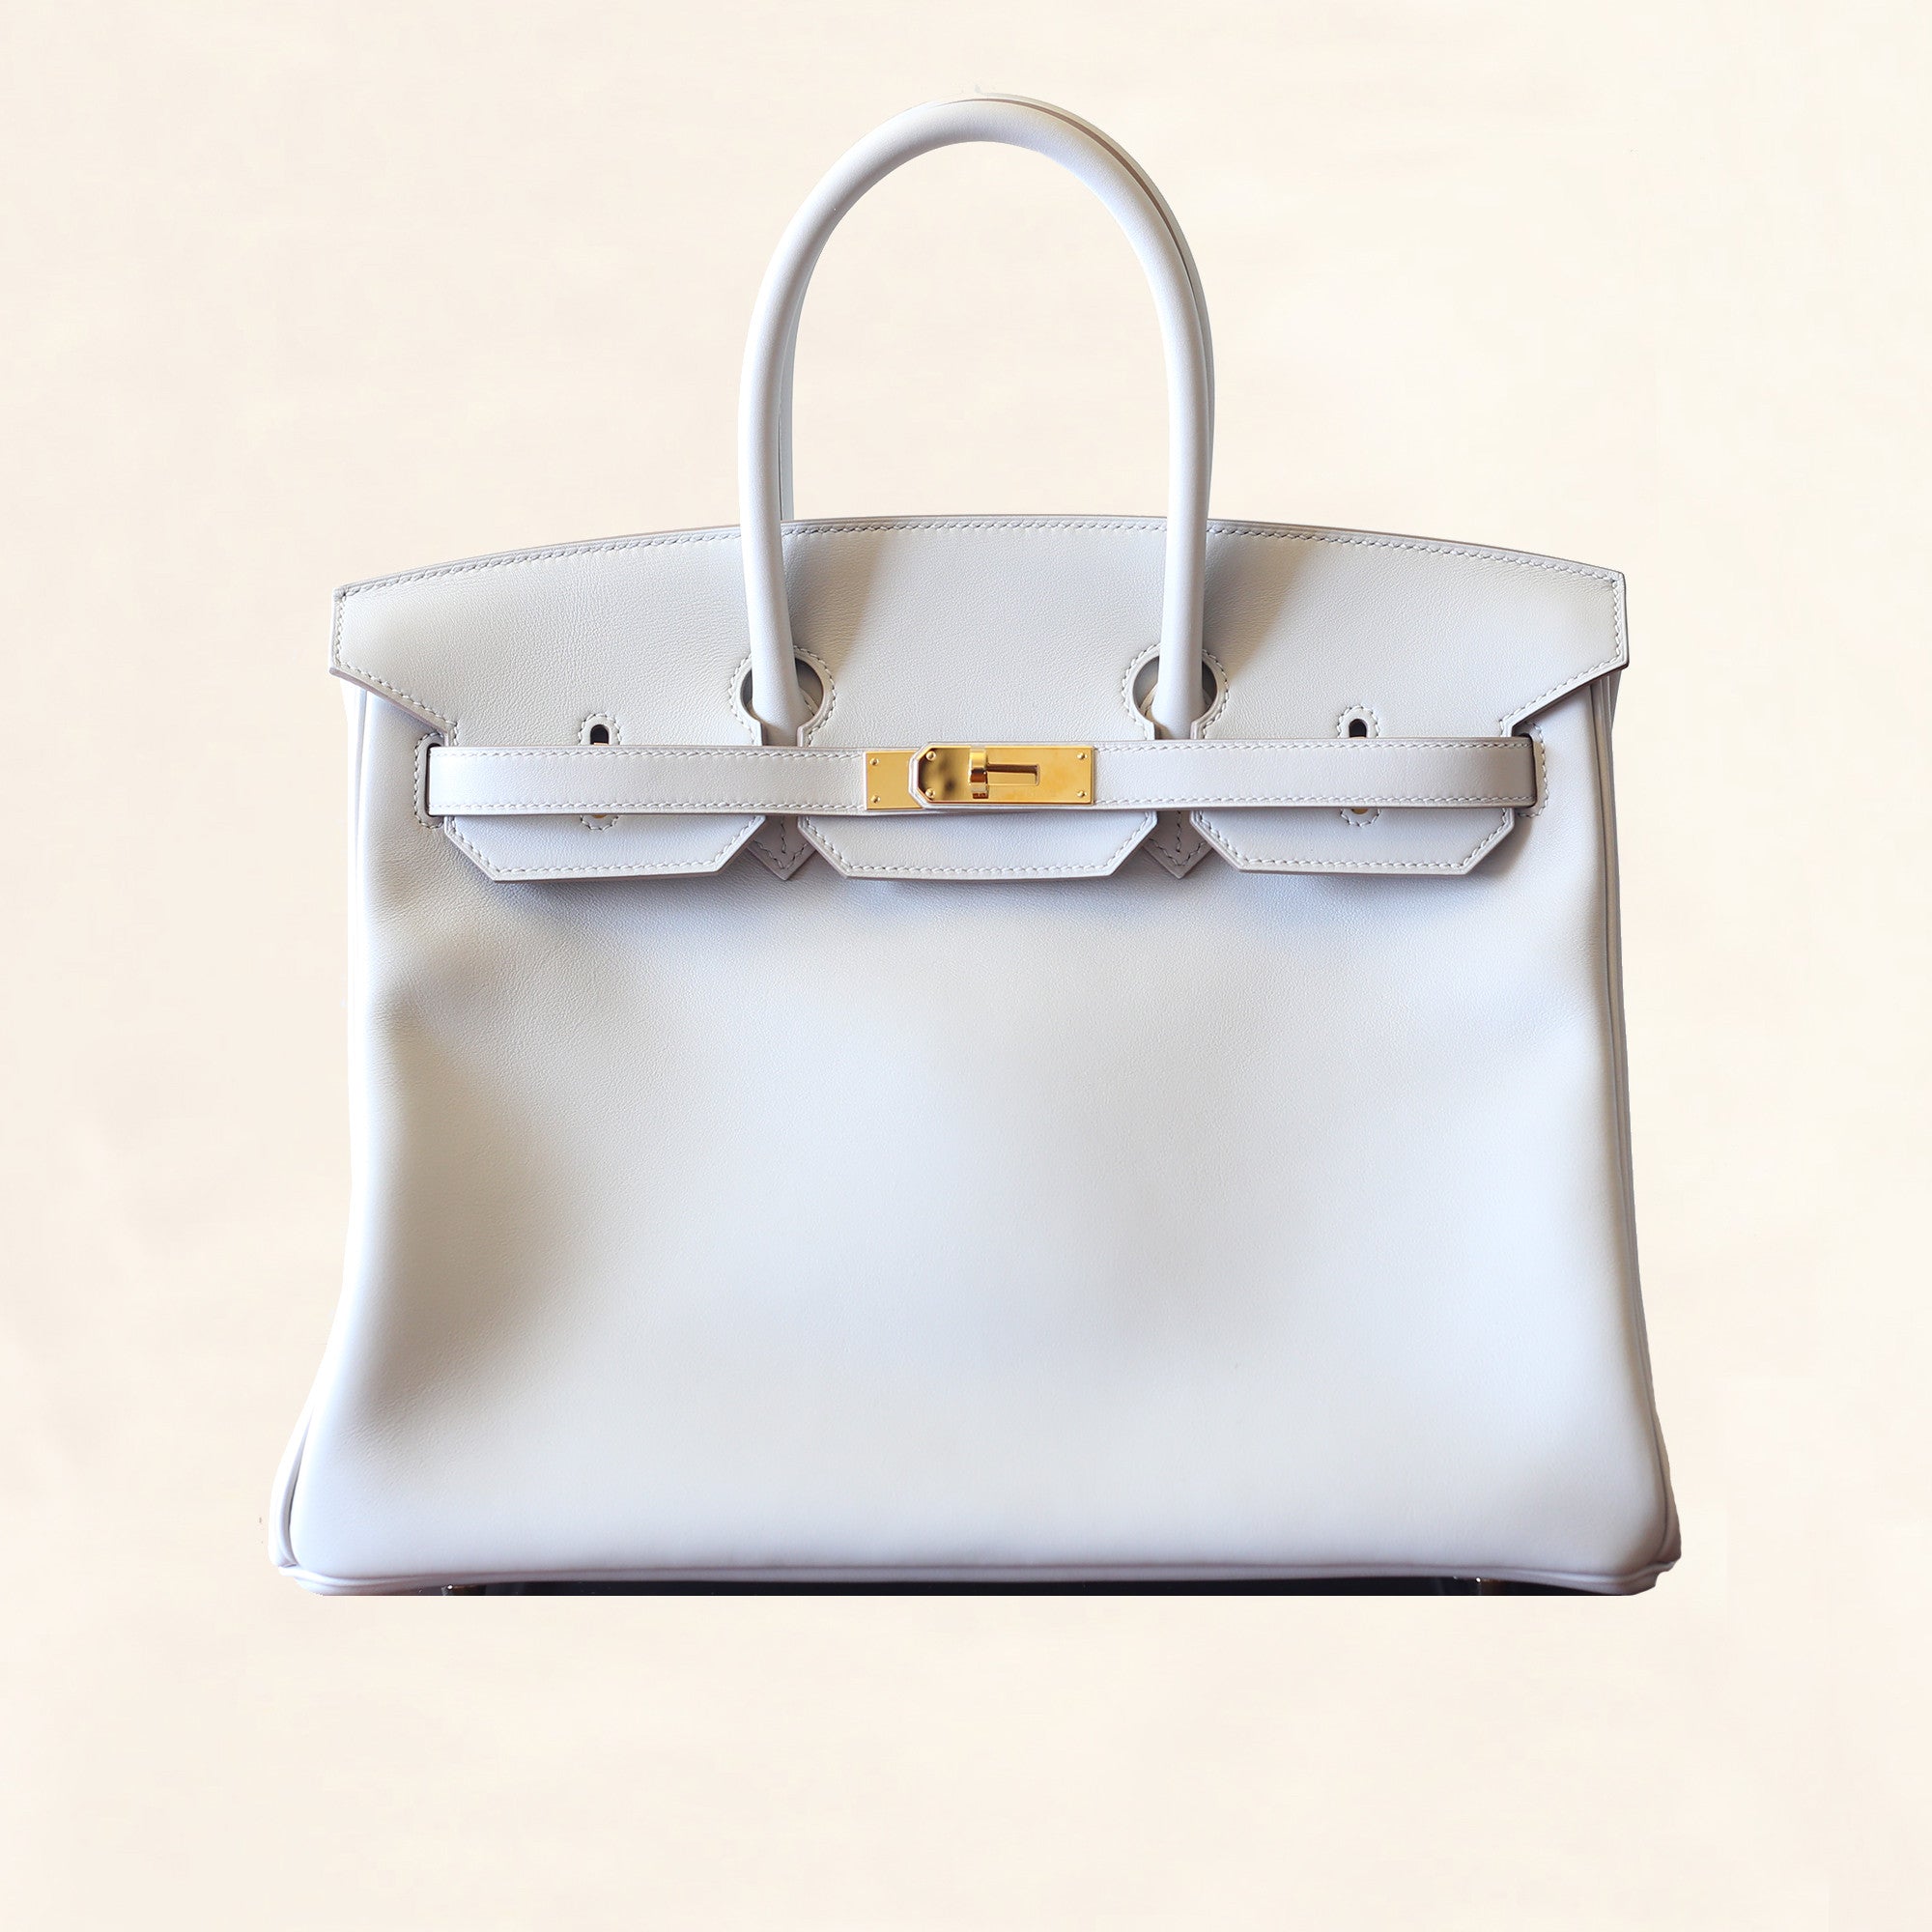 Hermès |Gris Perle Swift Birkin with Gold Hardware| 35